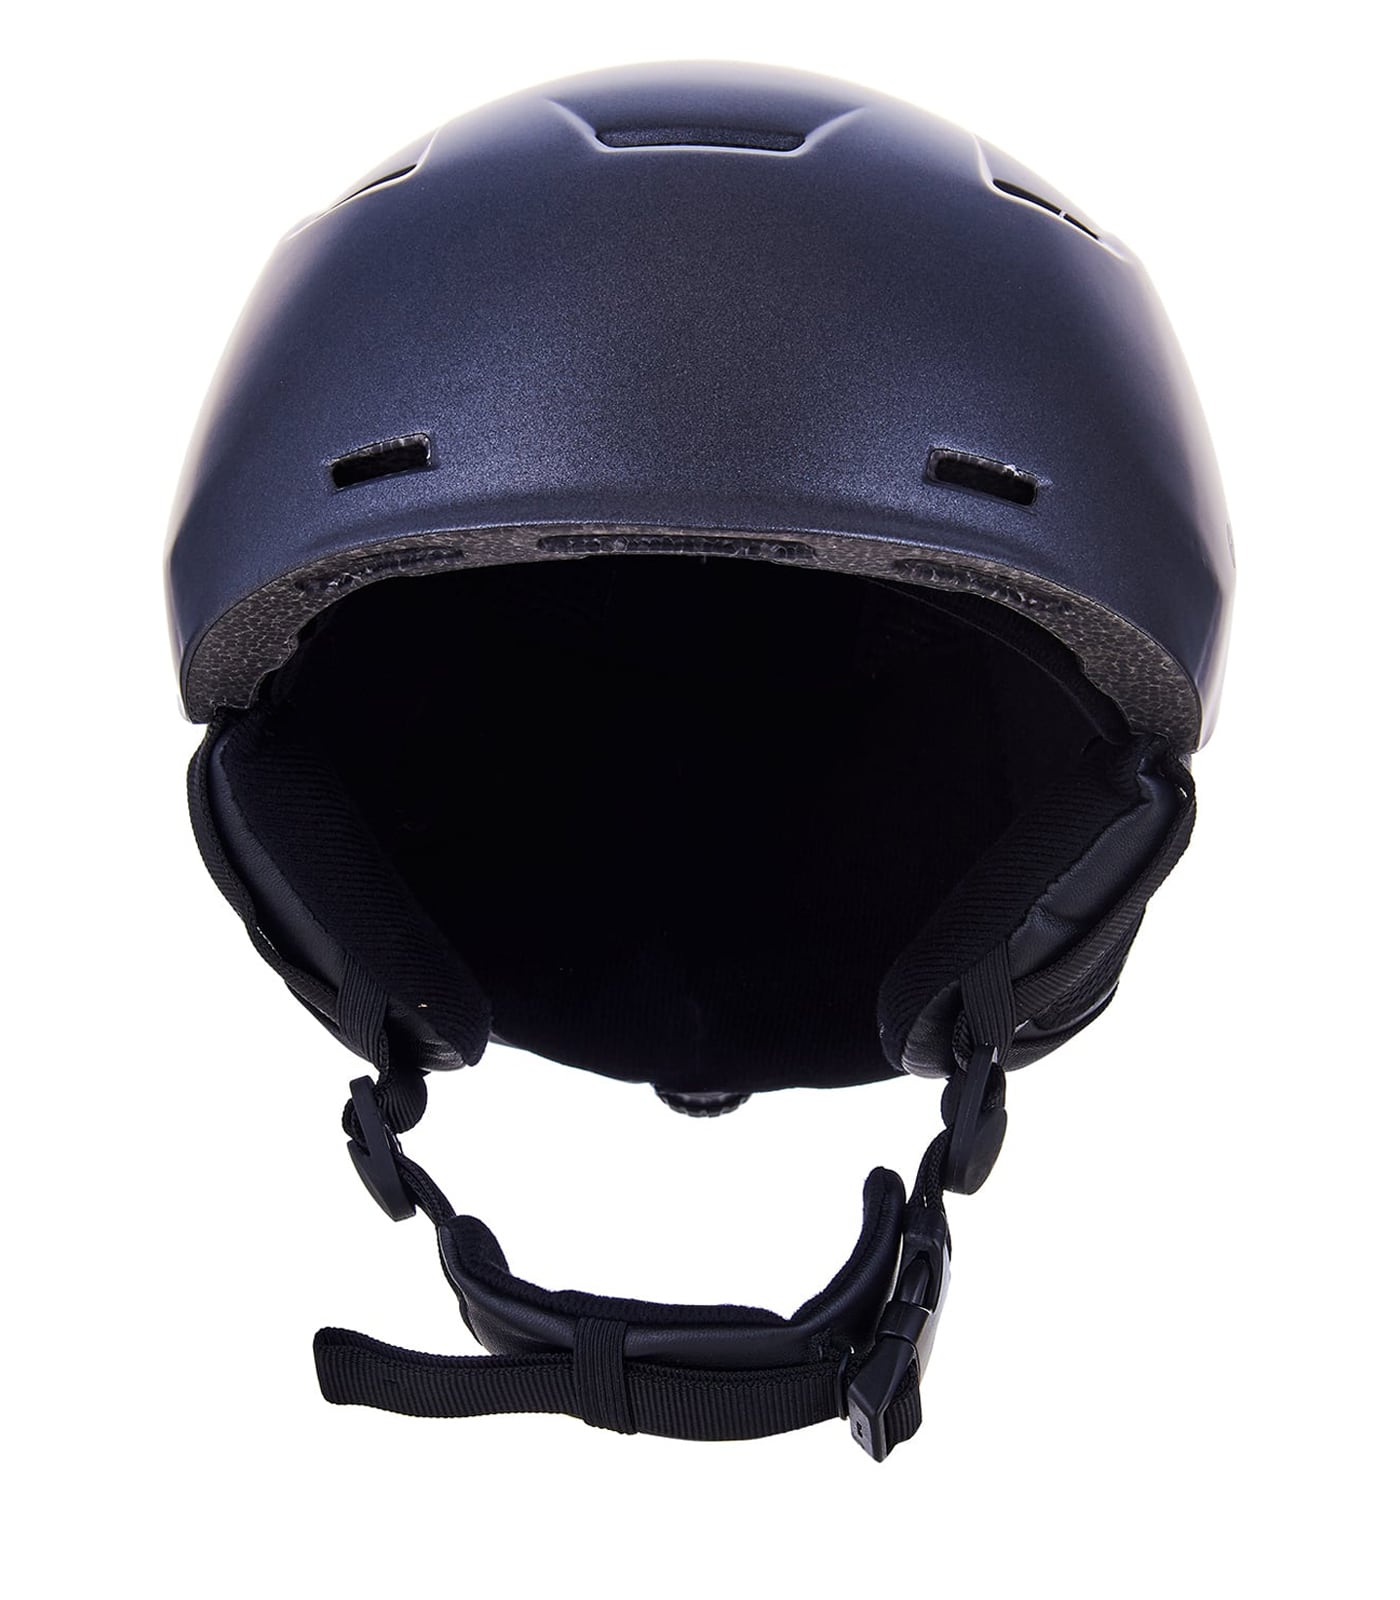 Storm ski helmet, grey metallic matt